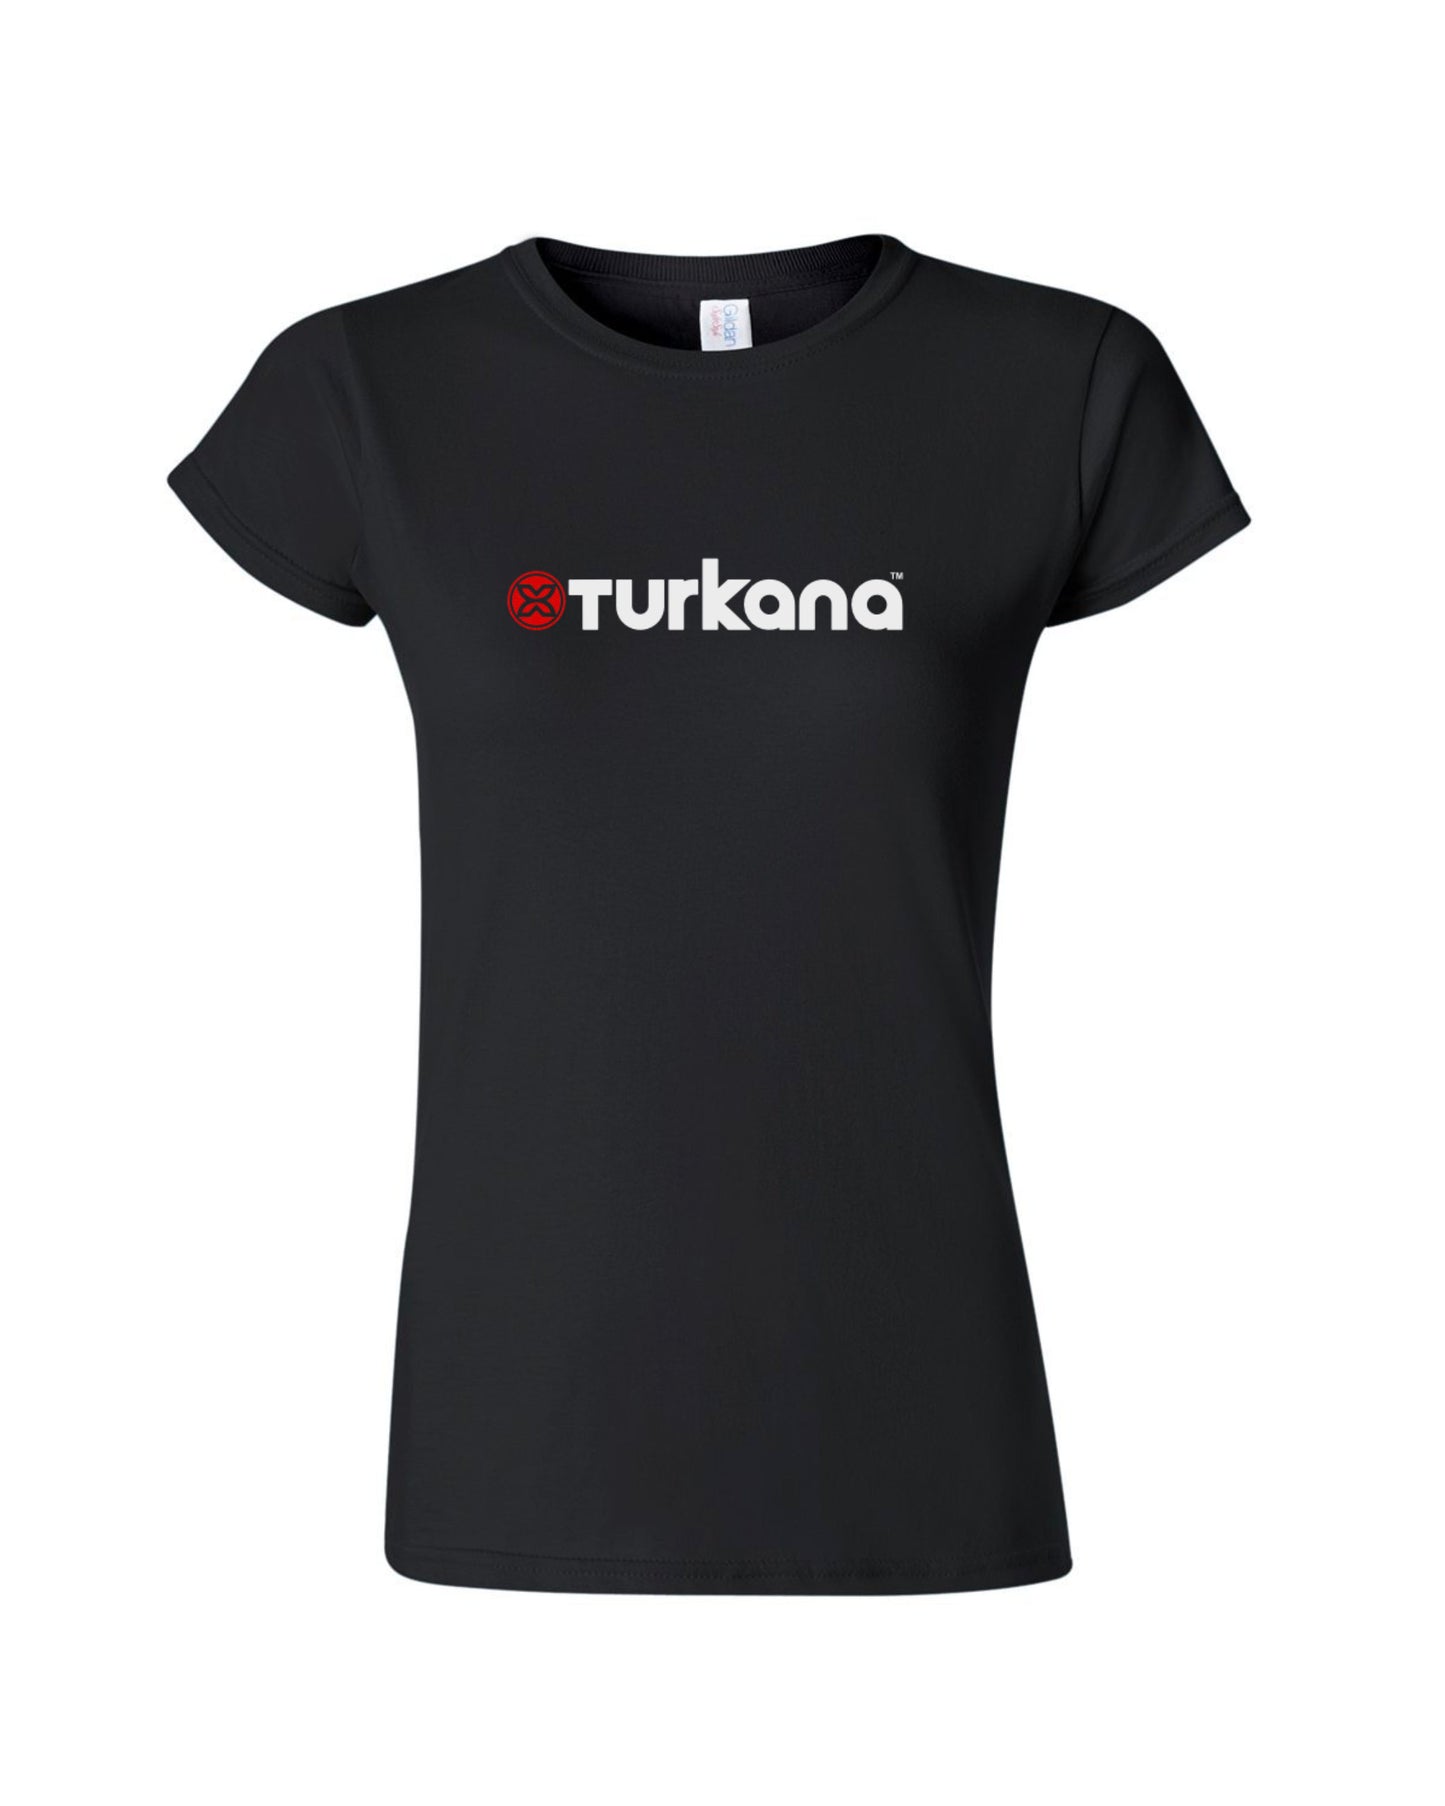 T-Shirt - Women’s with Turkana Logo (Black)